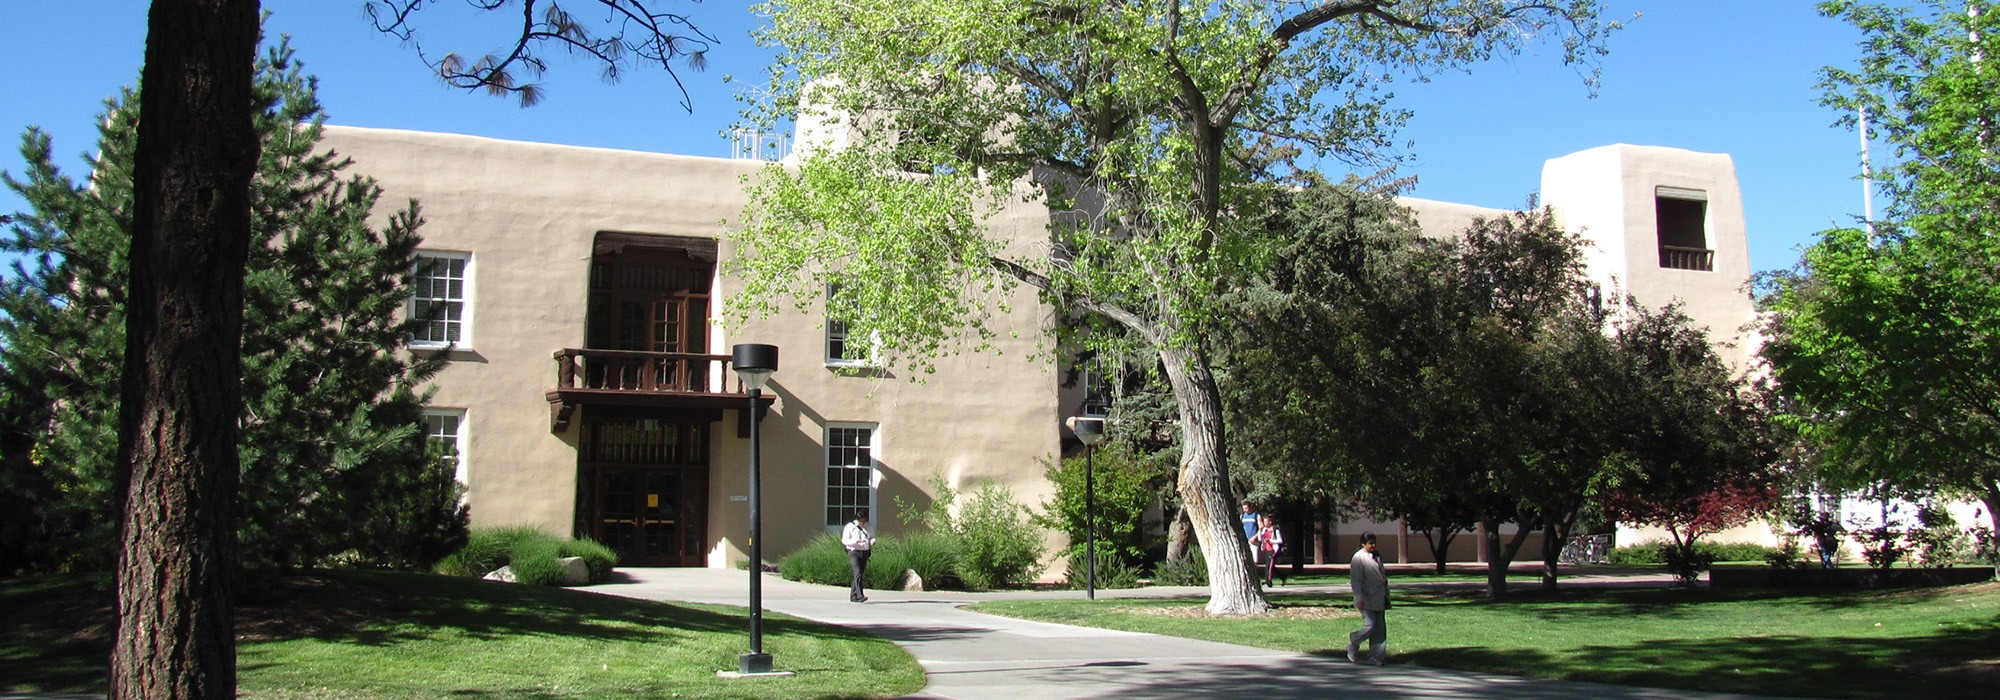 University of New Mexico, Albuquerque, NM